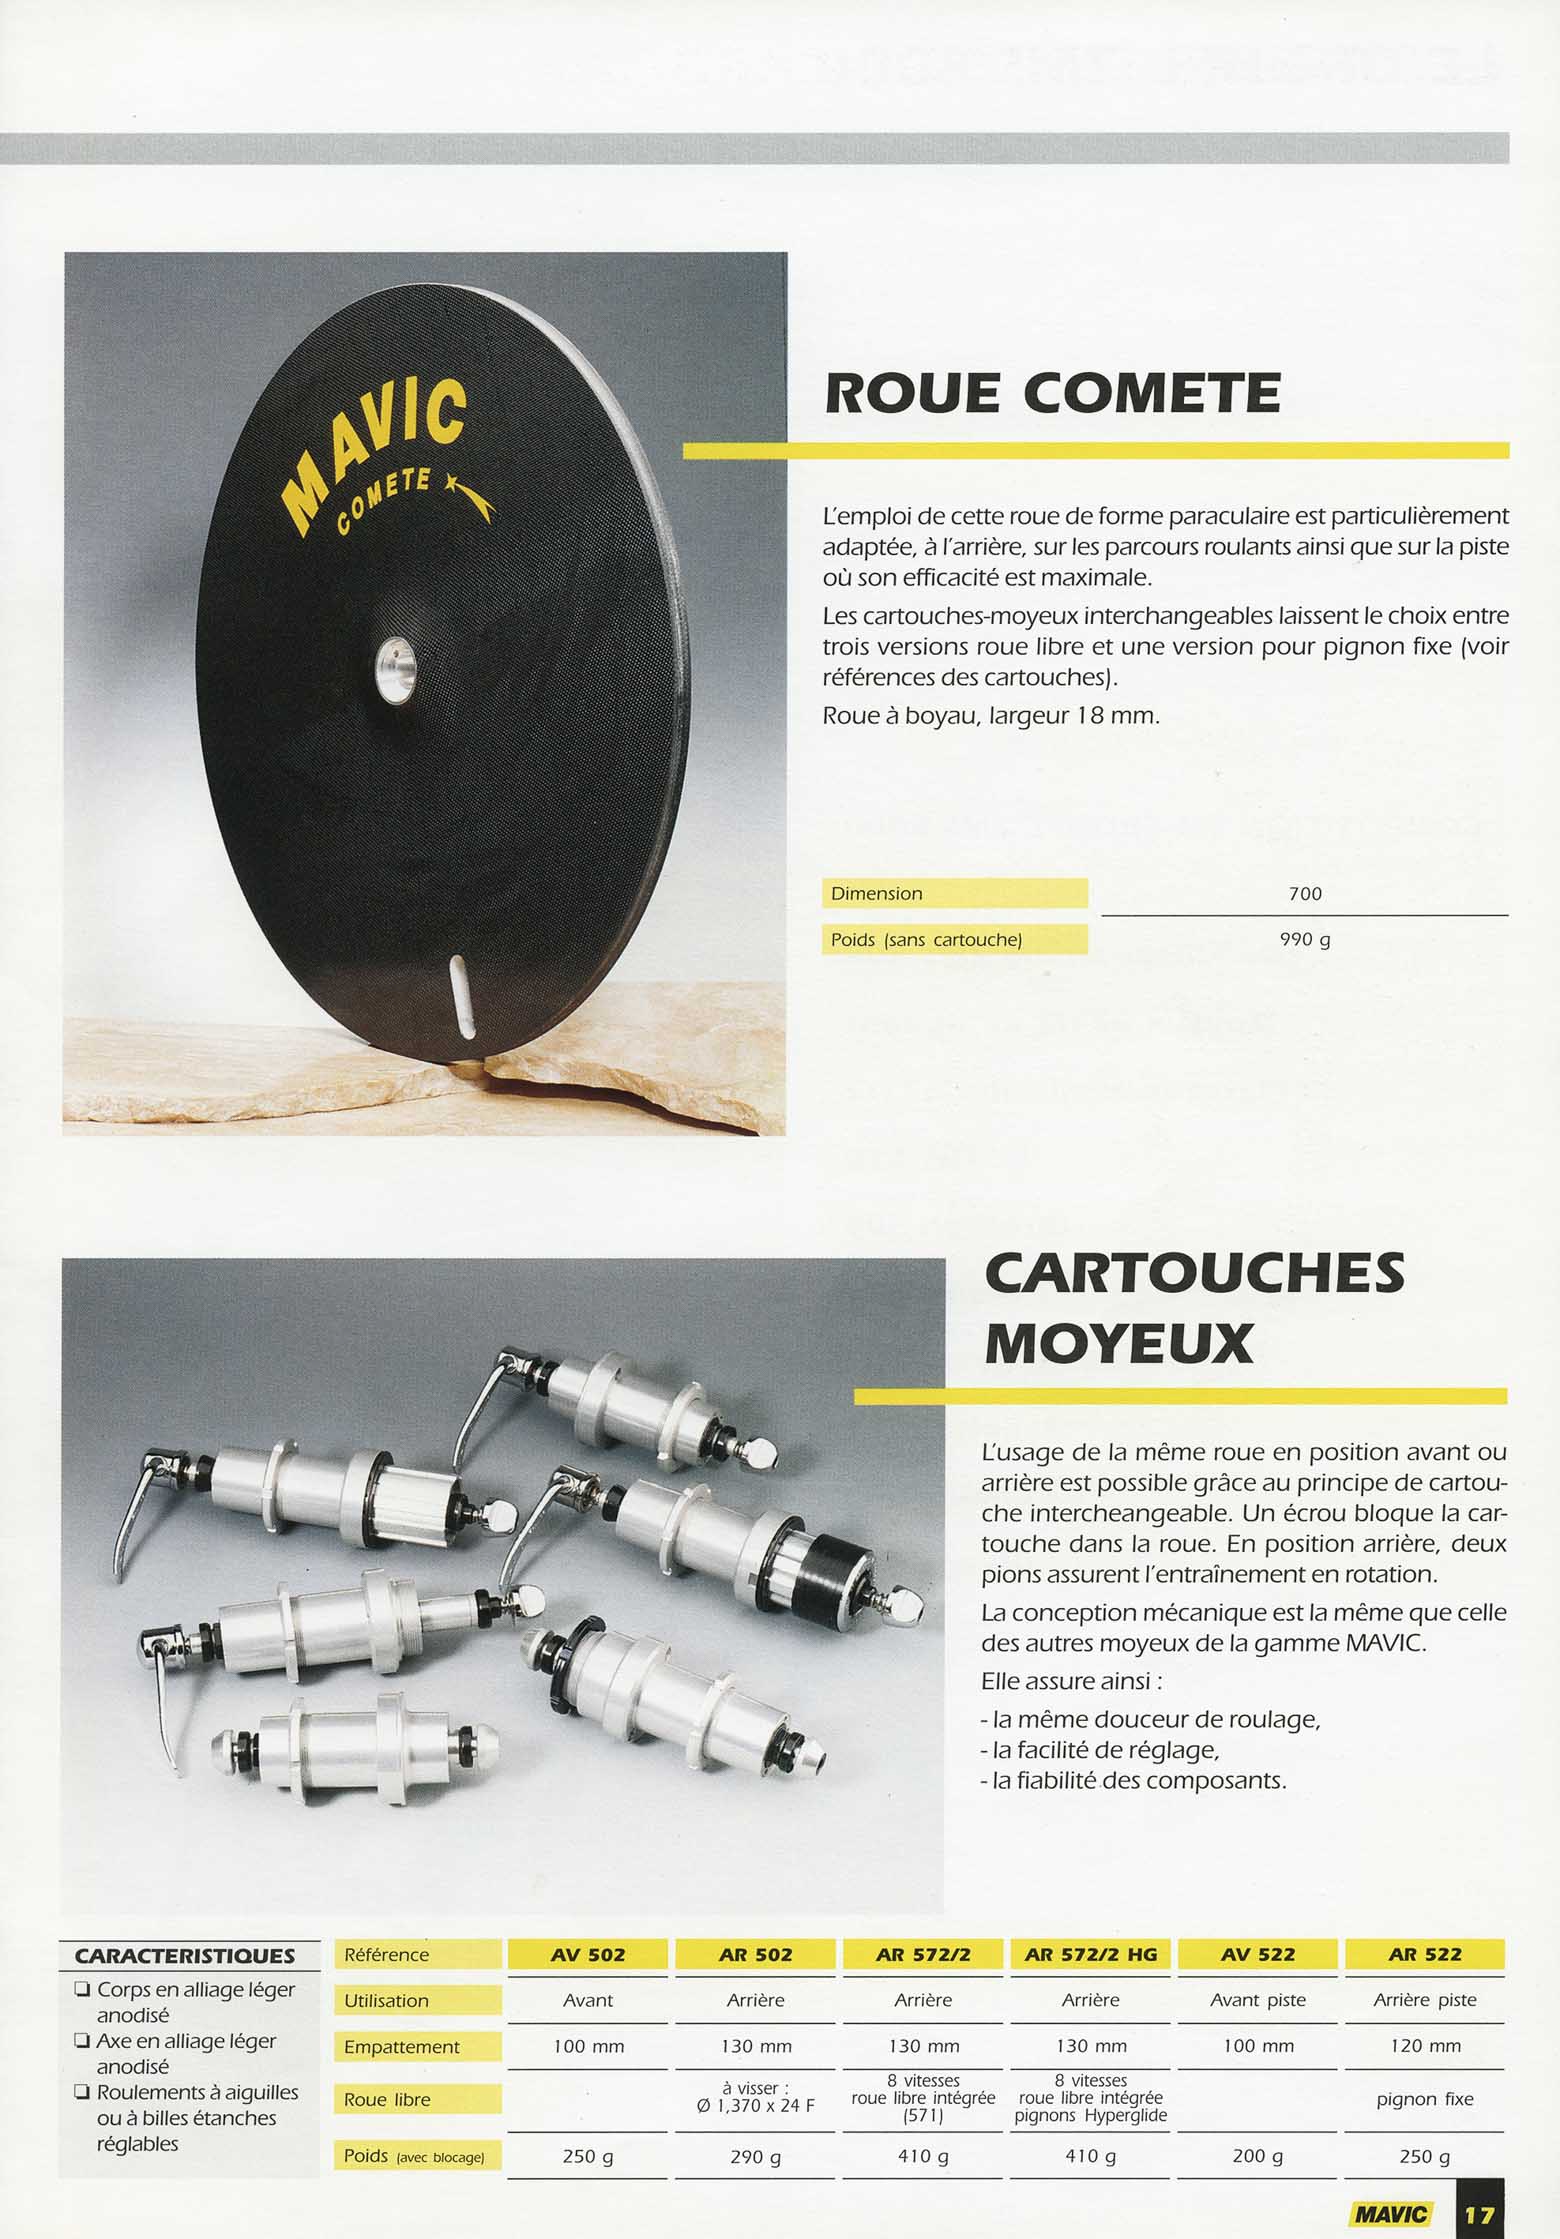 MAVIC Catalogue 1994 scan 17 main image